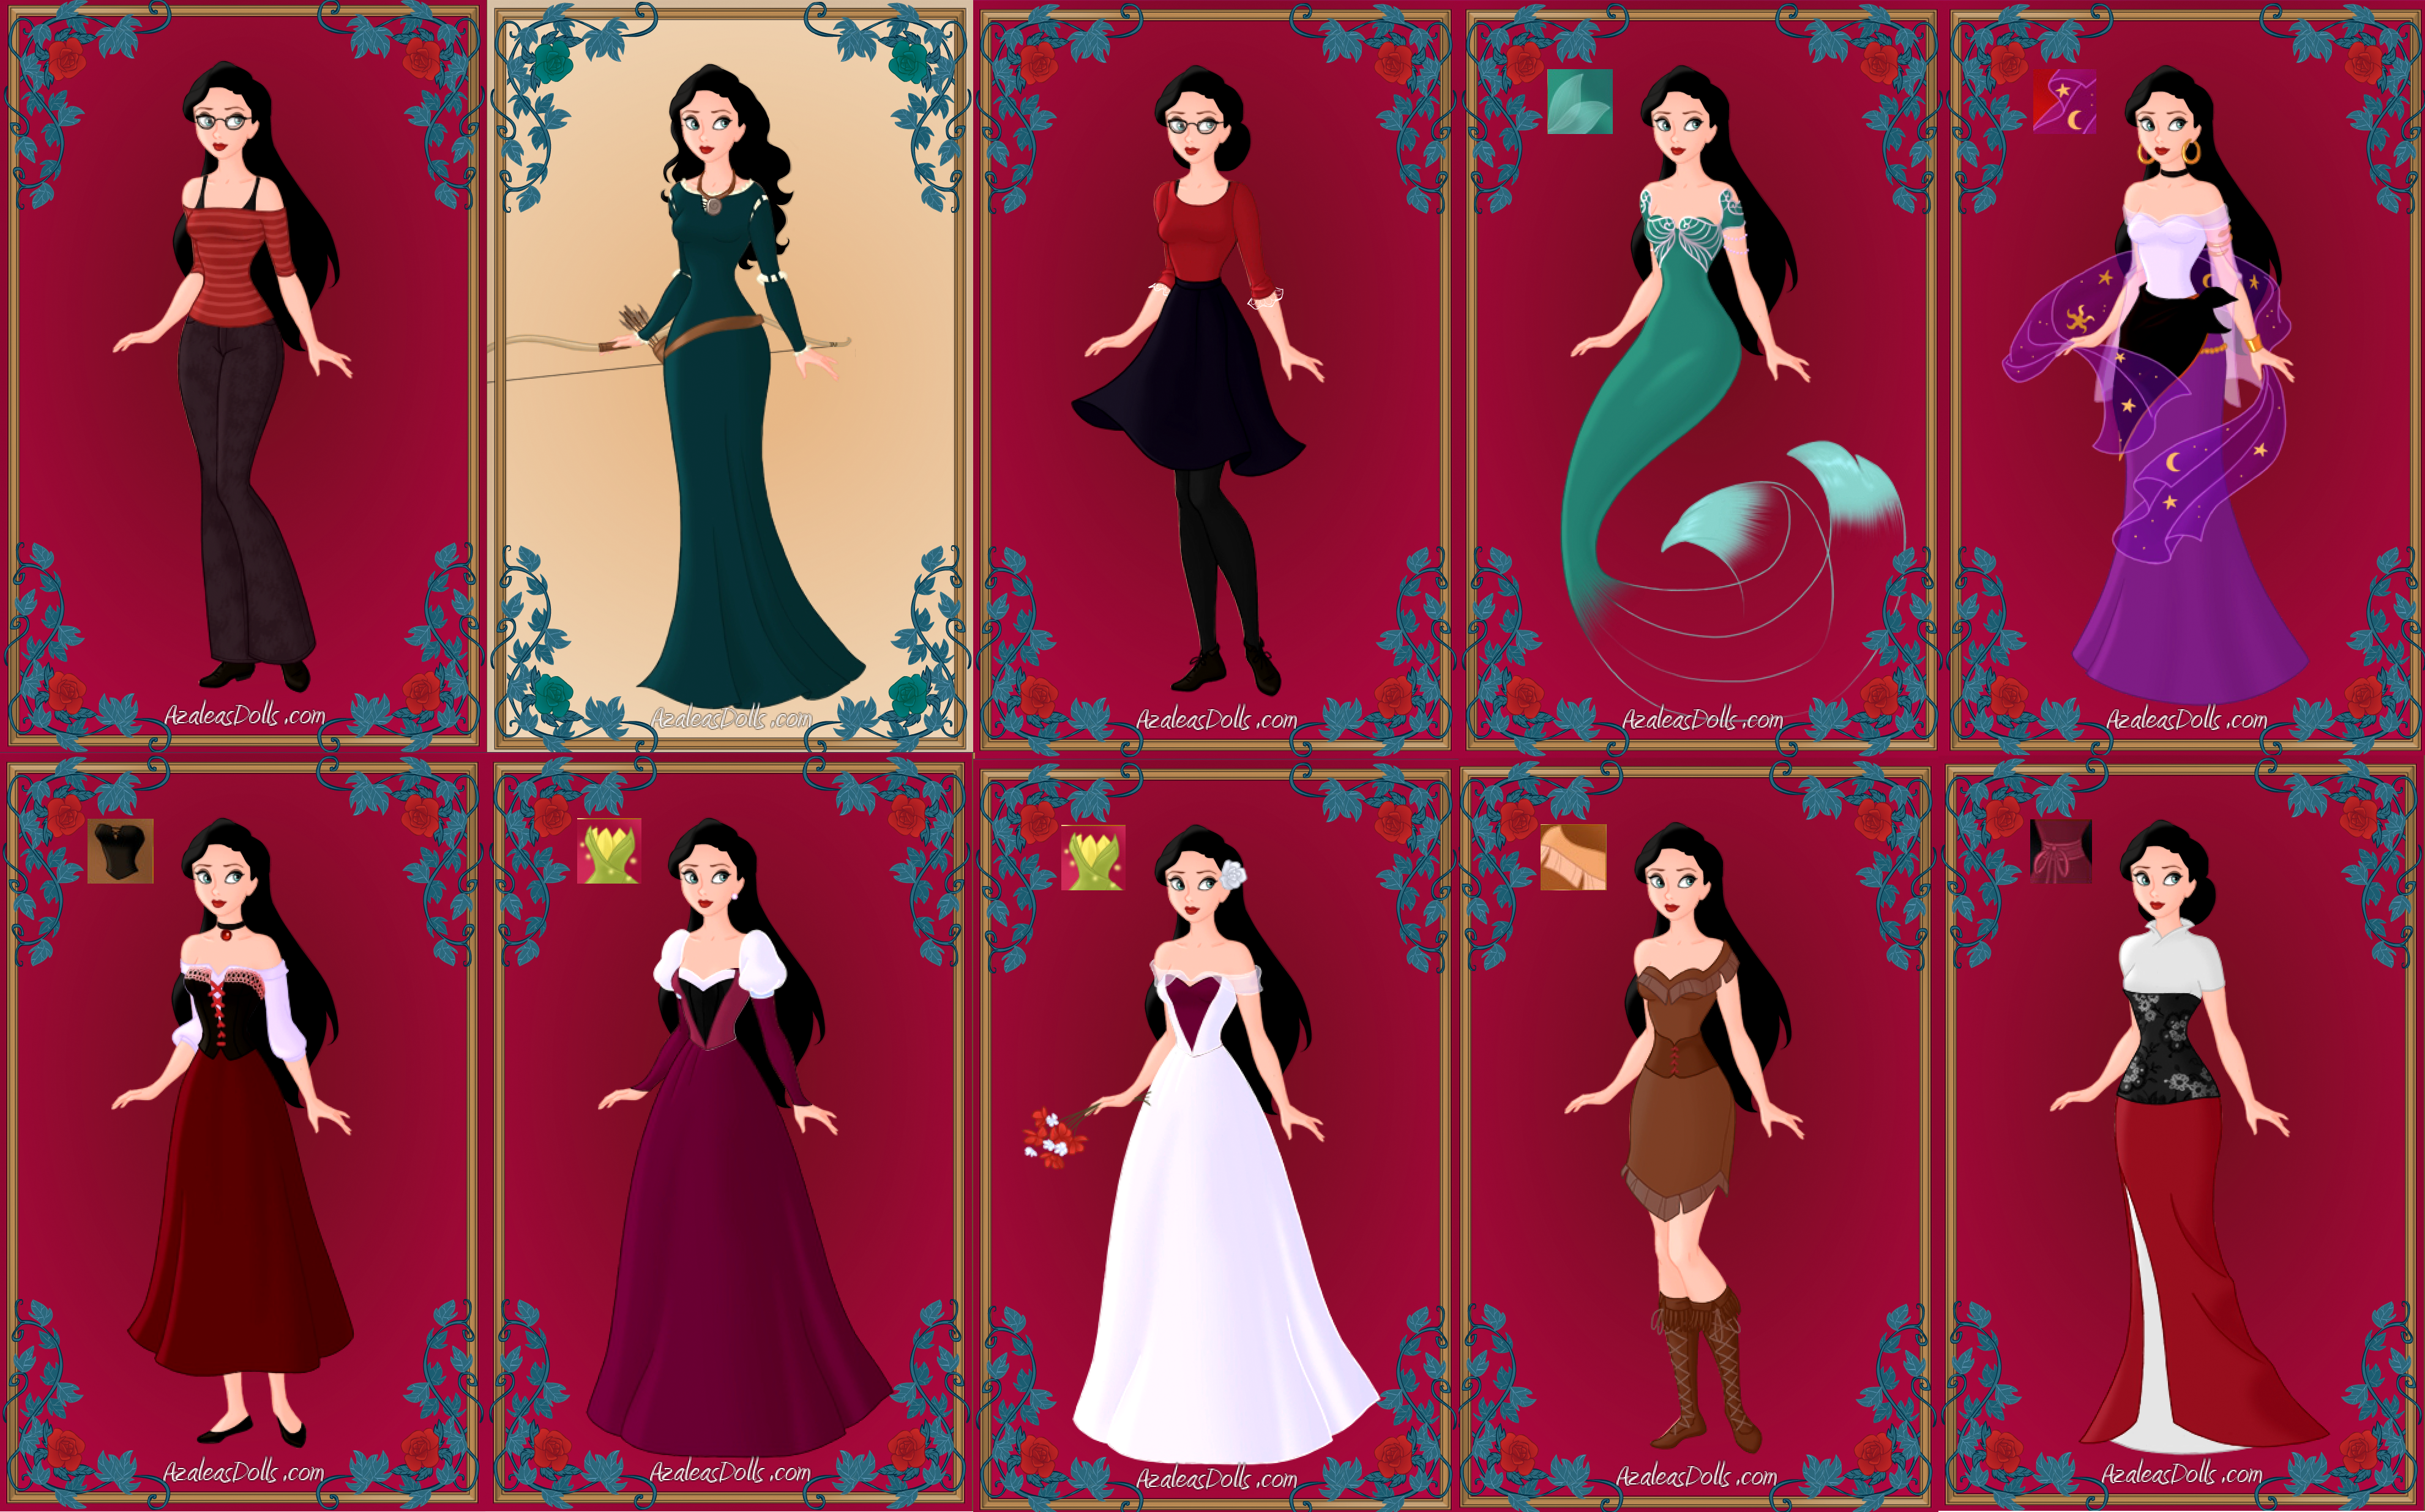 AzaleasDolls Game of Thrones - Disney Princess 2 by CheshireScalliArt on  DeviantArt